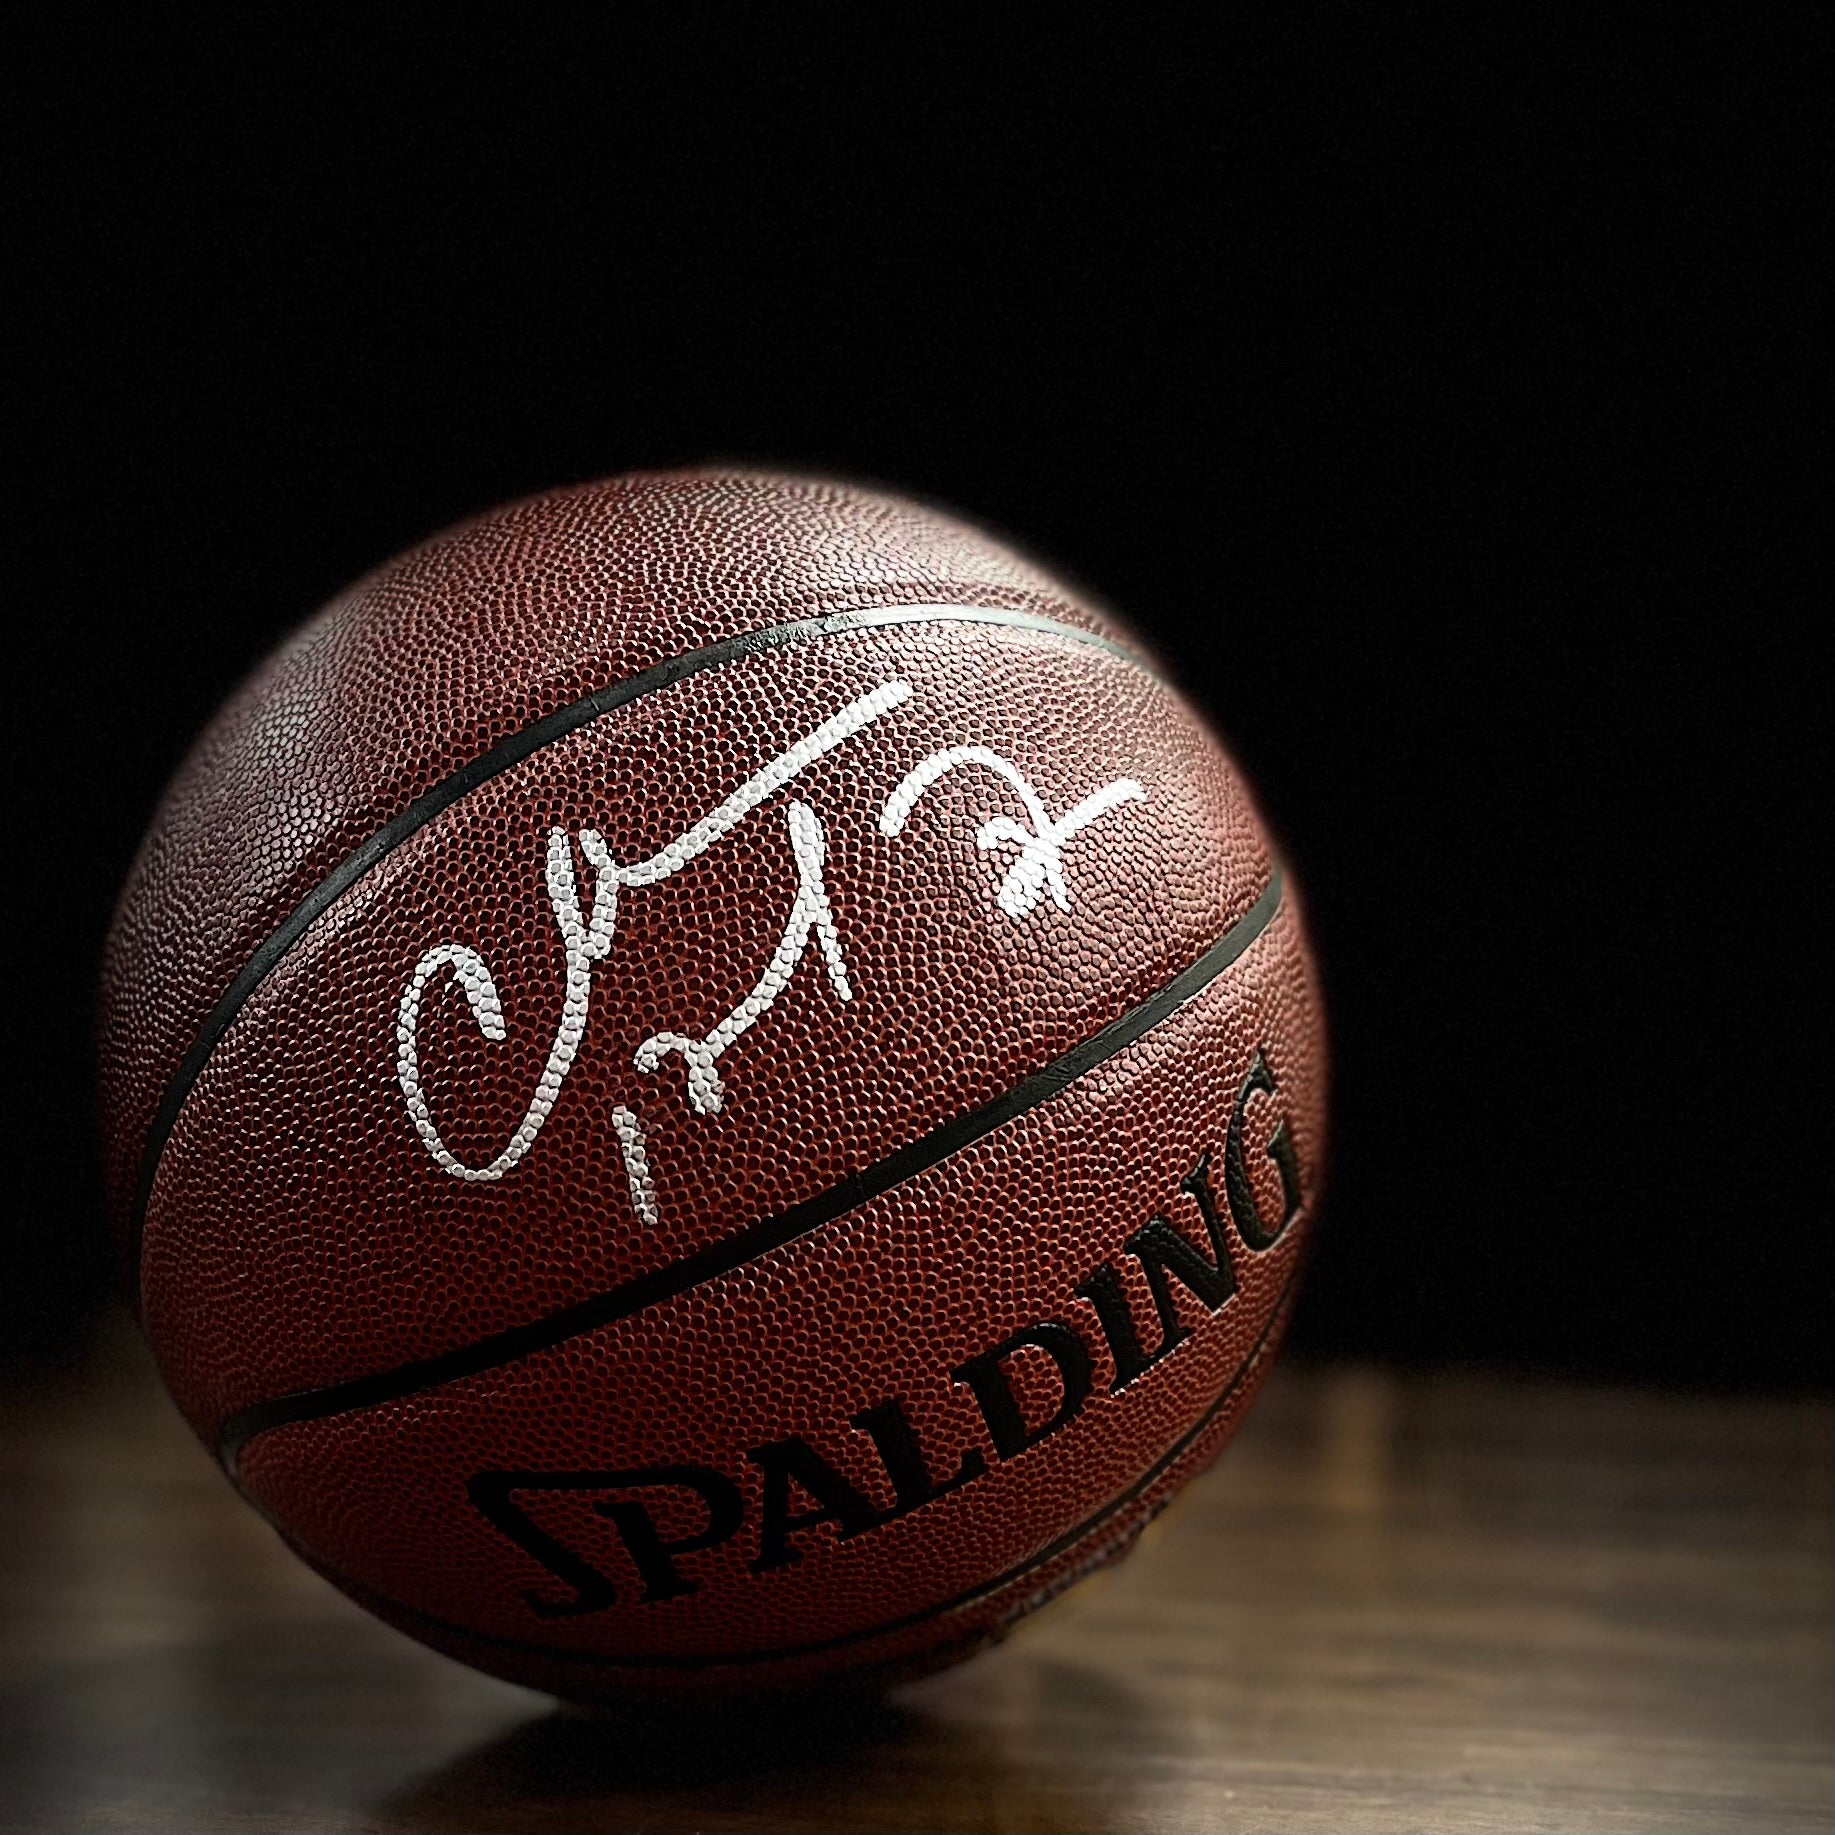 Charles Barkley Philadelphia 76ers Autographed Basketball - Dynasty Sports & Framing 